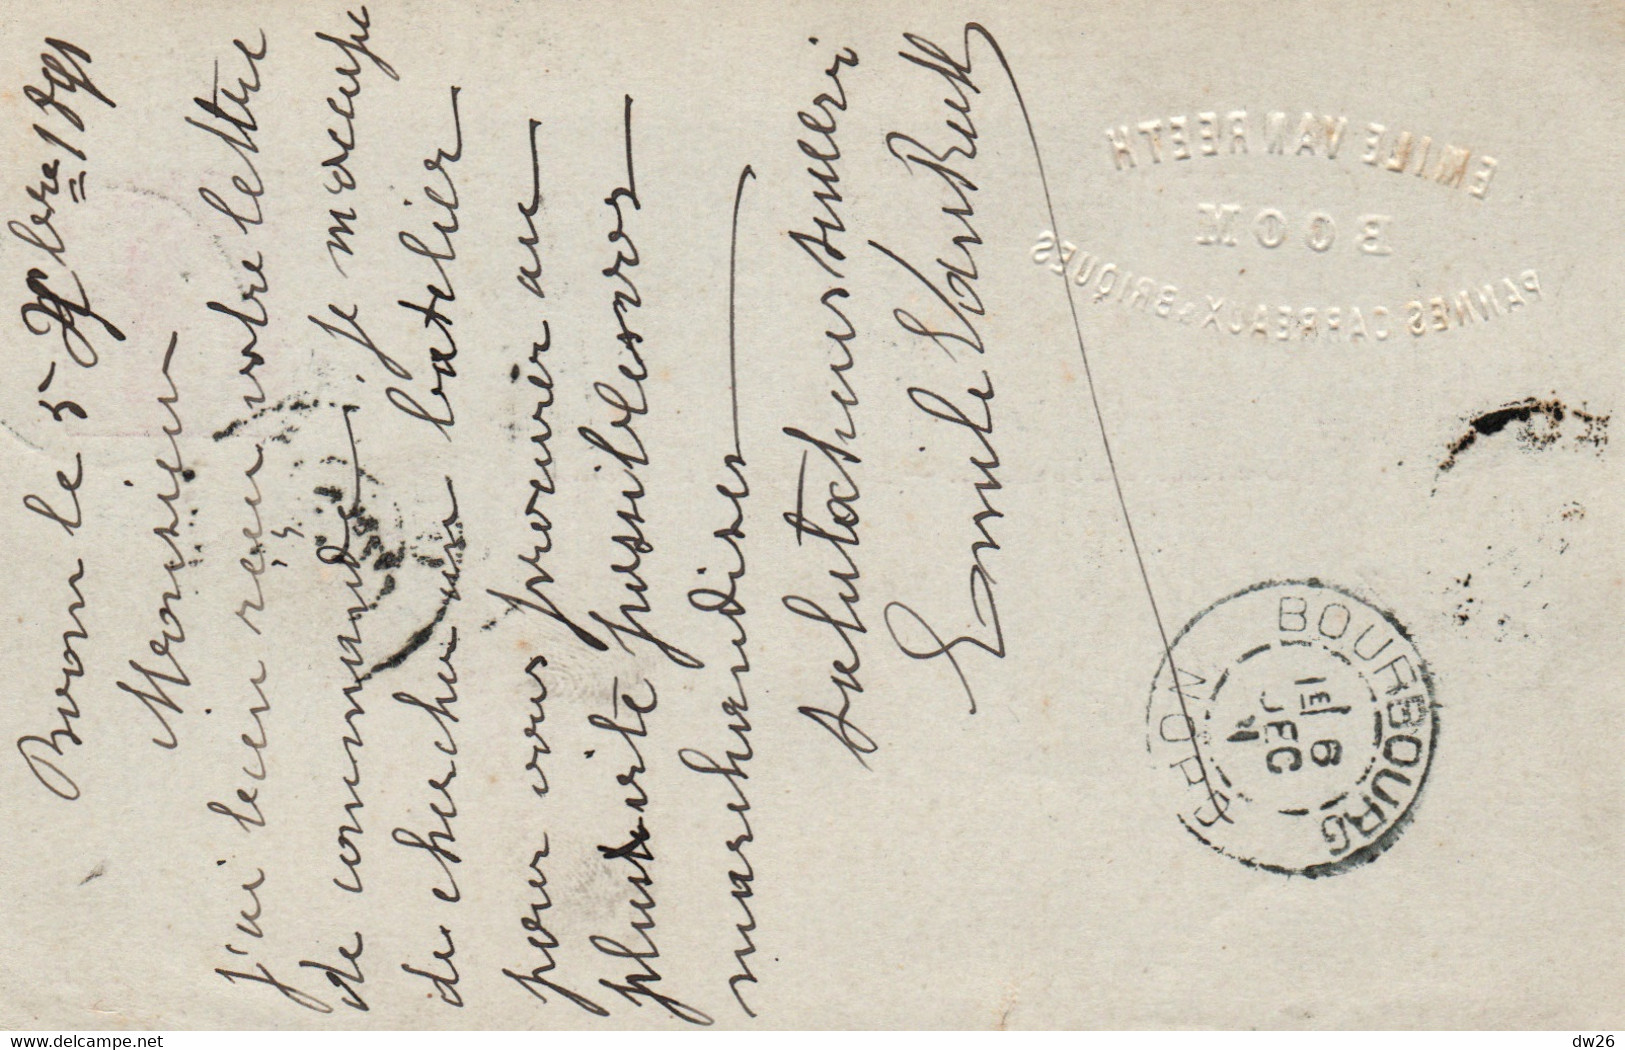 Belgique - Carte Postale De 1891, Entier Postal - Tampon Emile Van Reeth (Boom, Anvers) - Boom